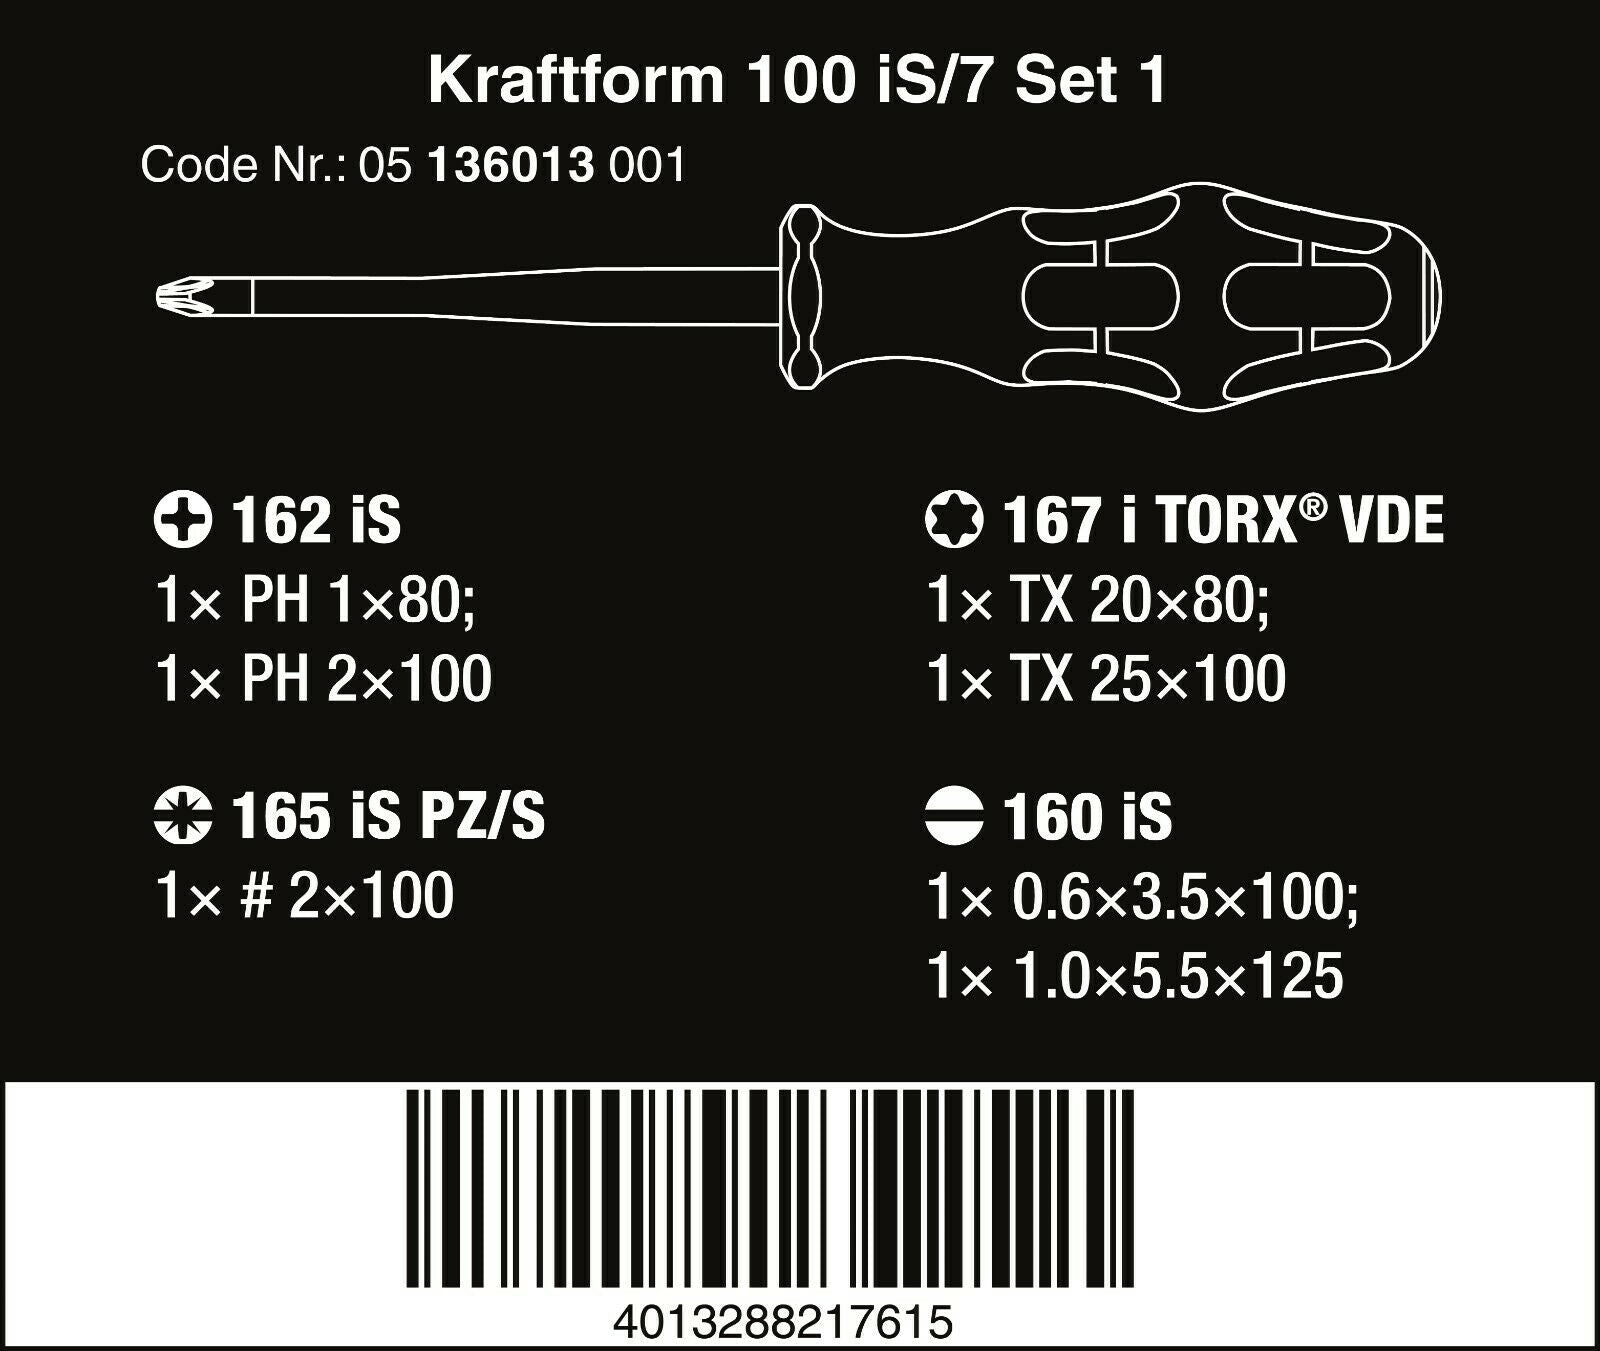 wera 100 is/7 vde set 1 kraftform insulated screwdriver set 7 piece 05136013001